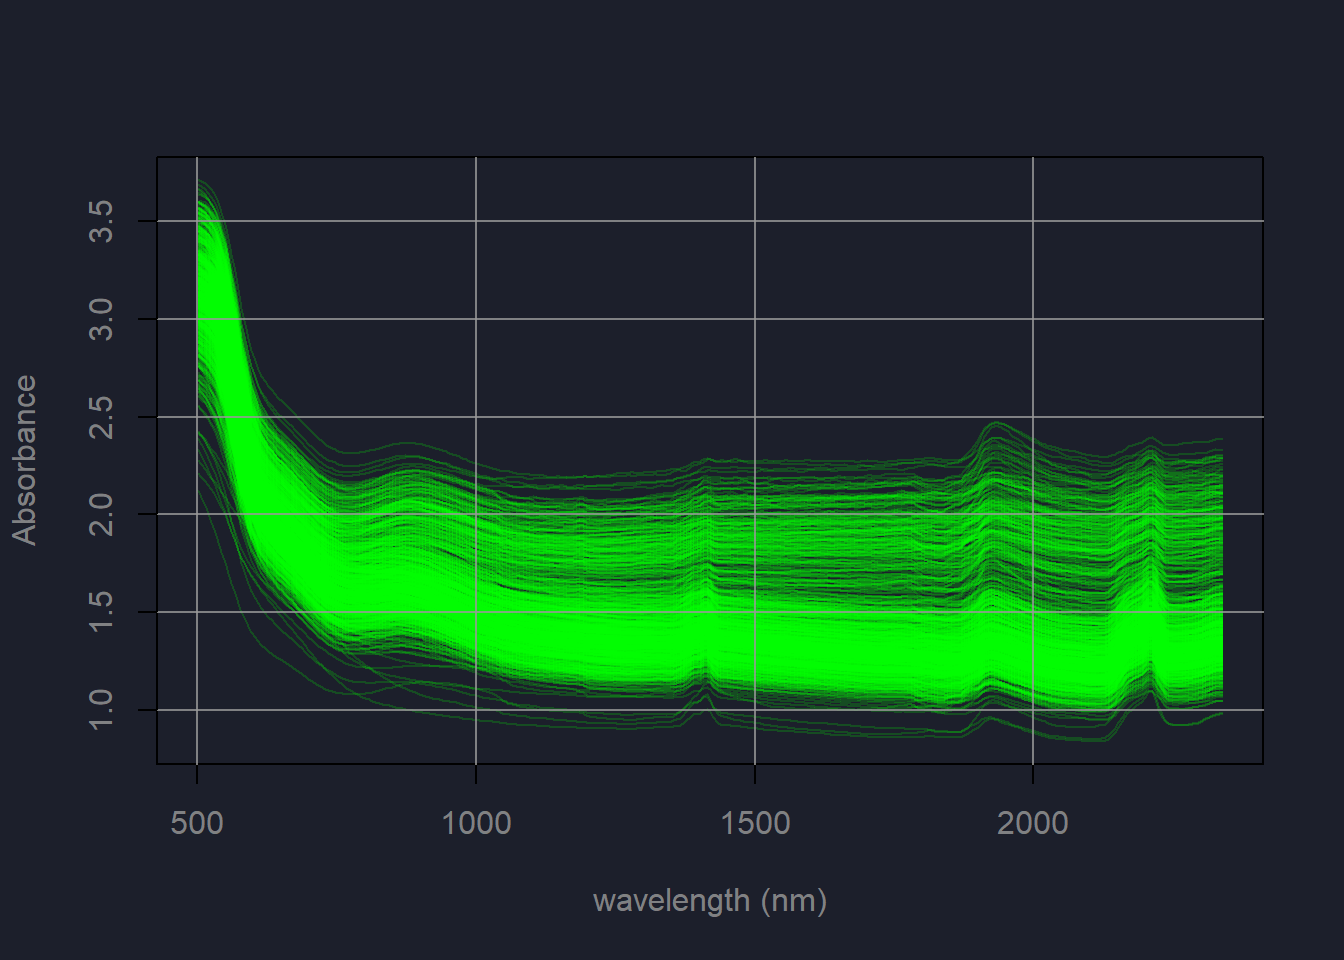 Spectra in the SoilNIRSaoPaulo dataset